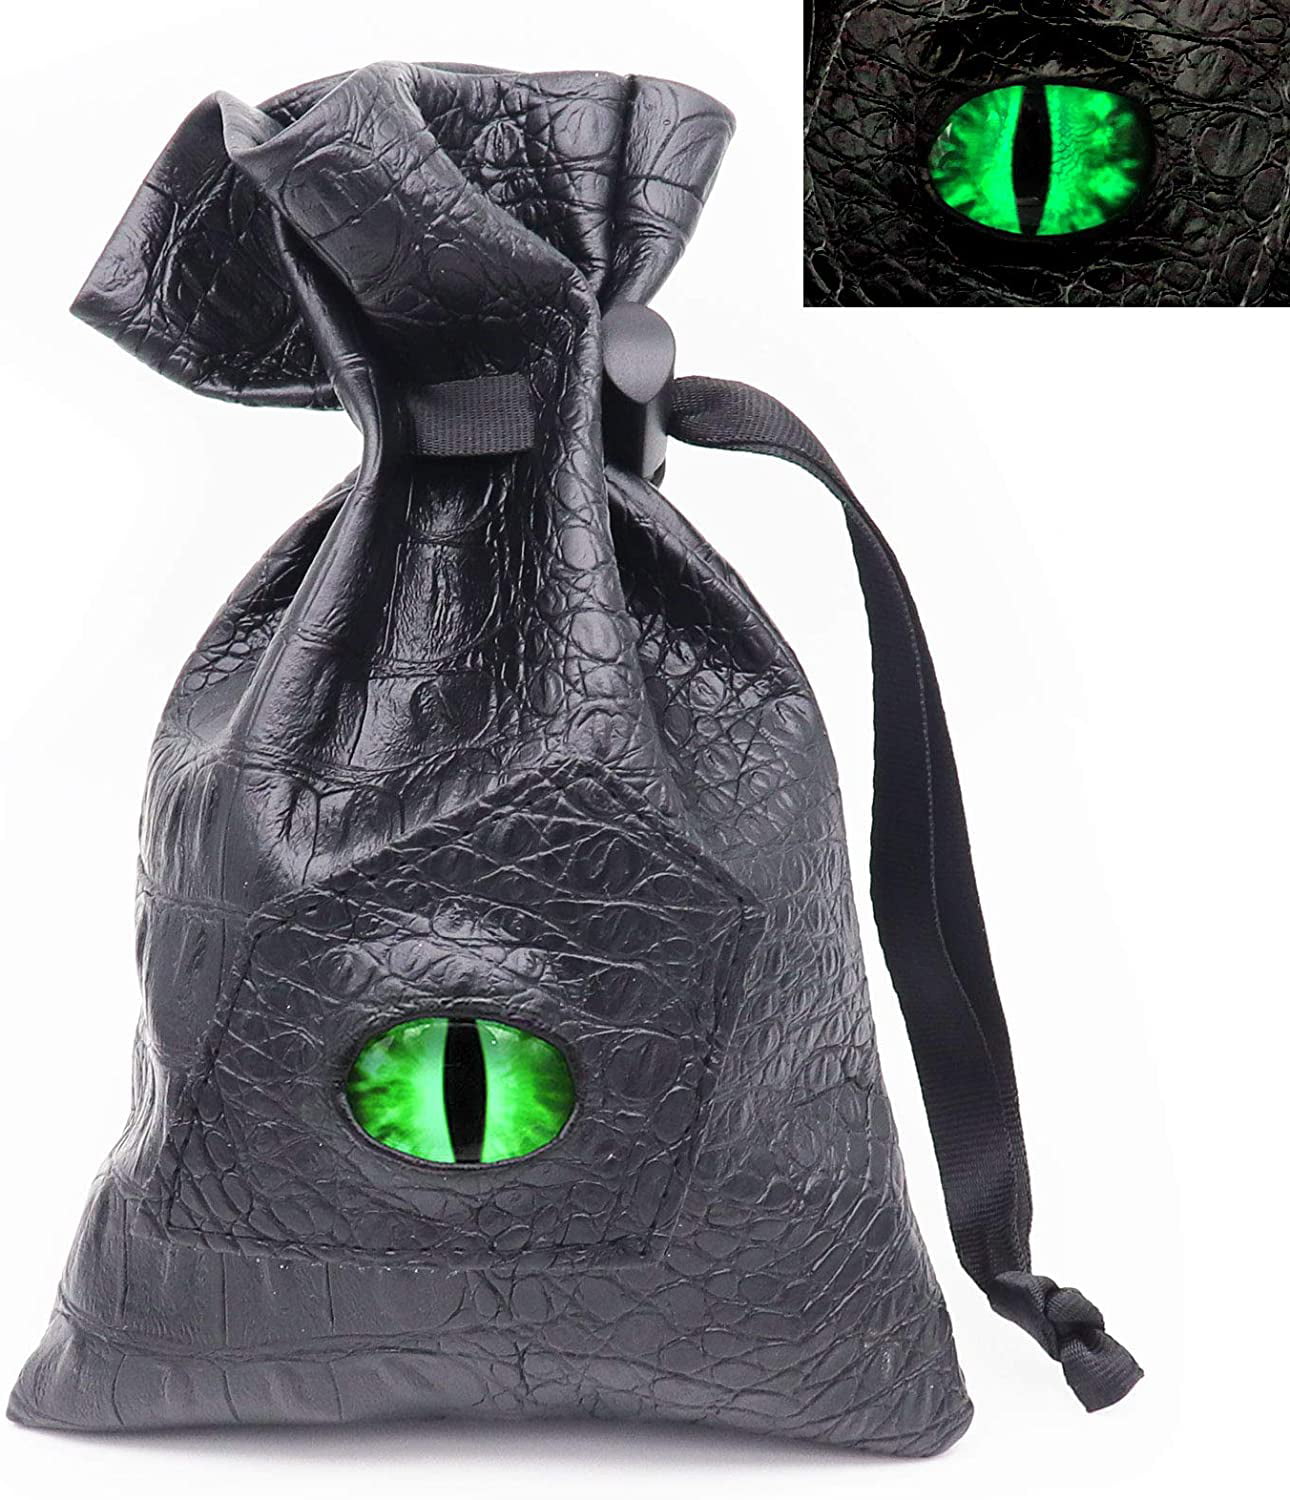 Ent Green & black Dice Bag 